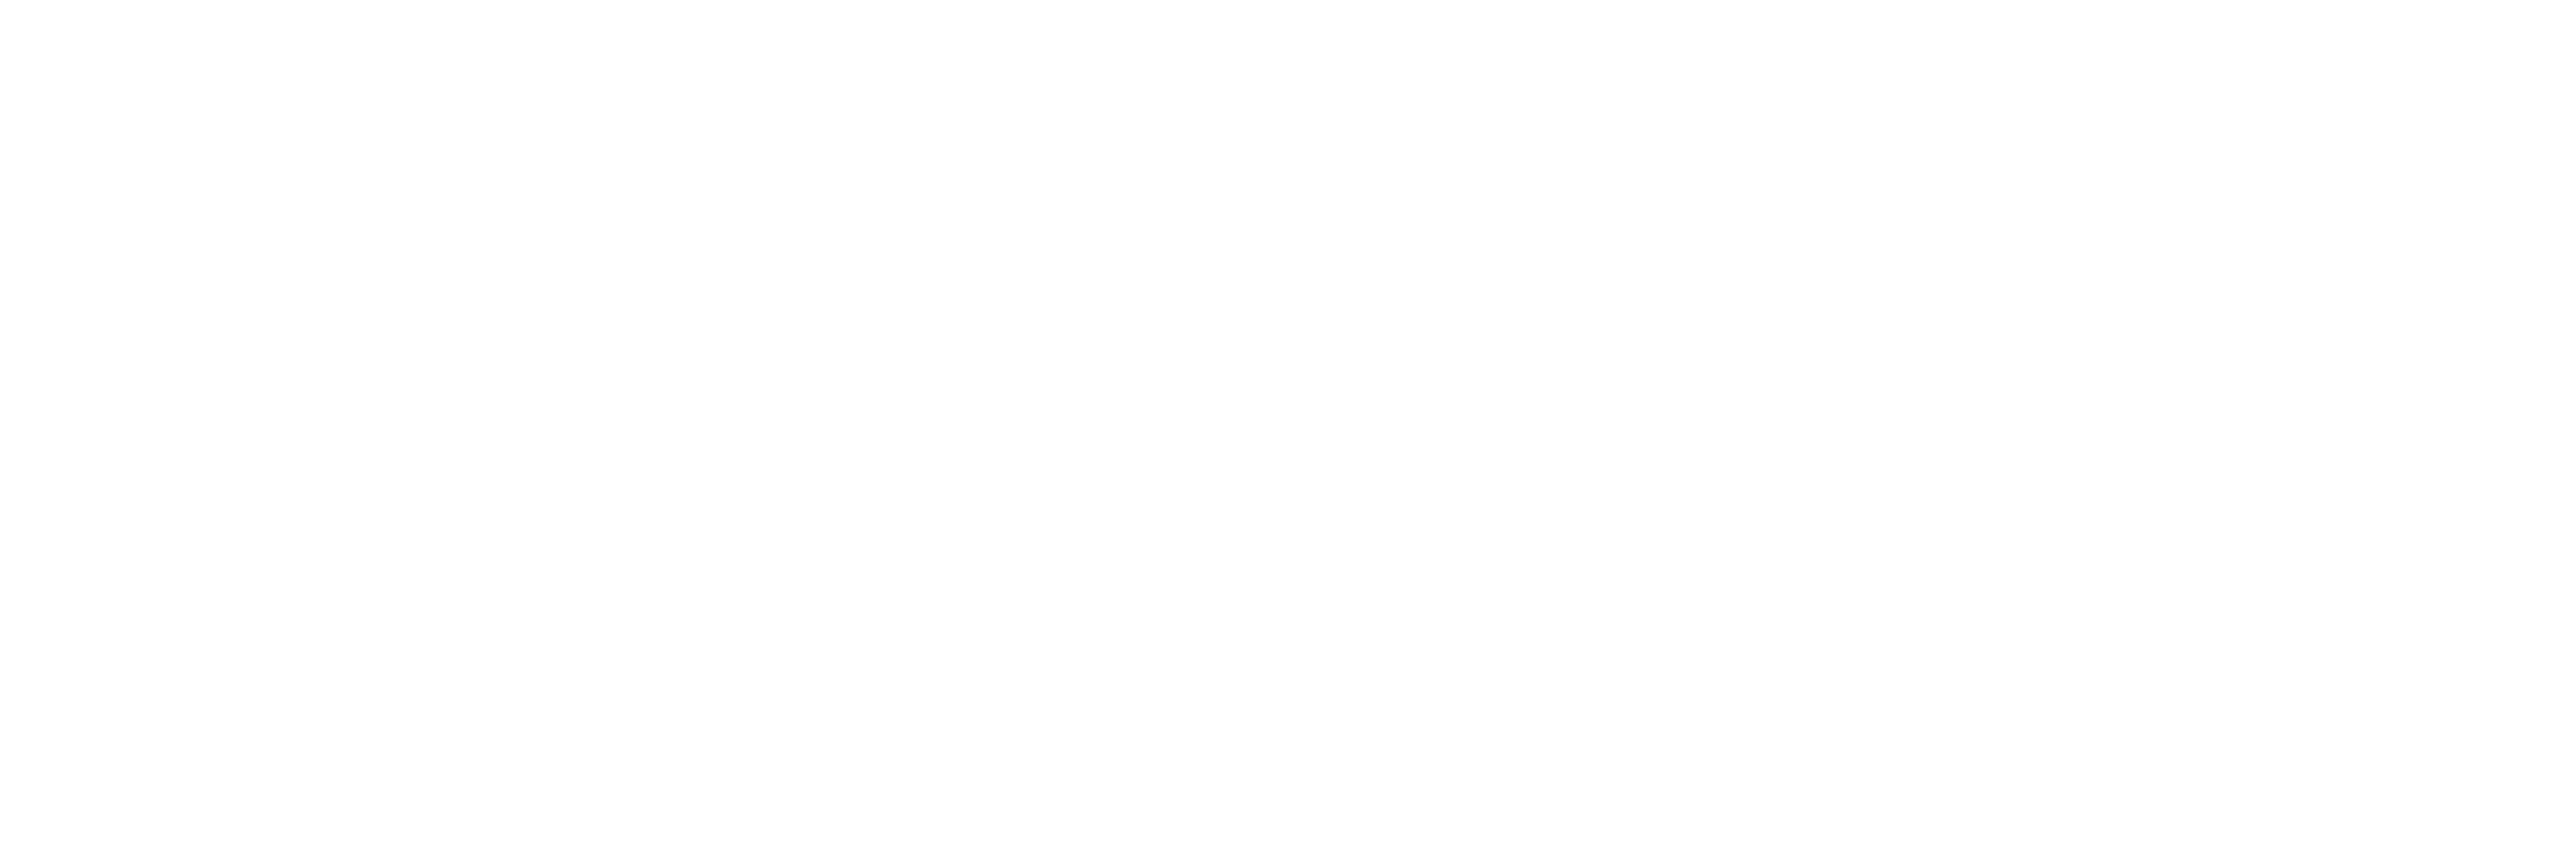 christin and chris script logo 2